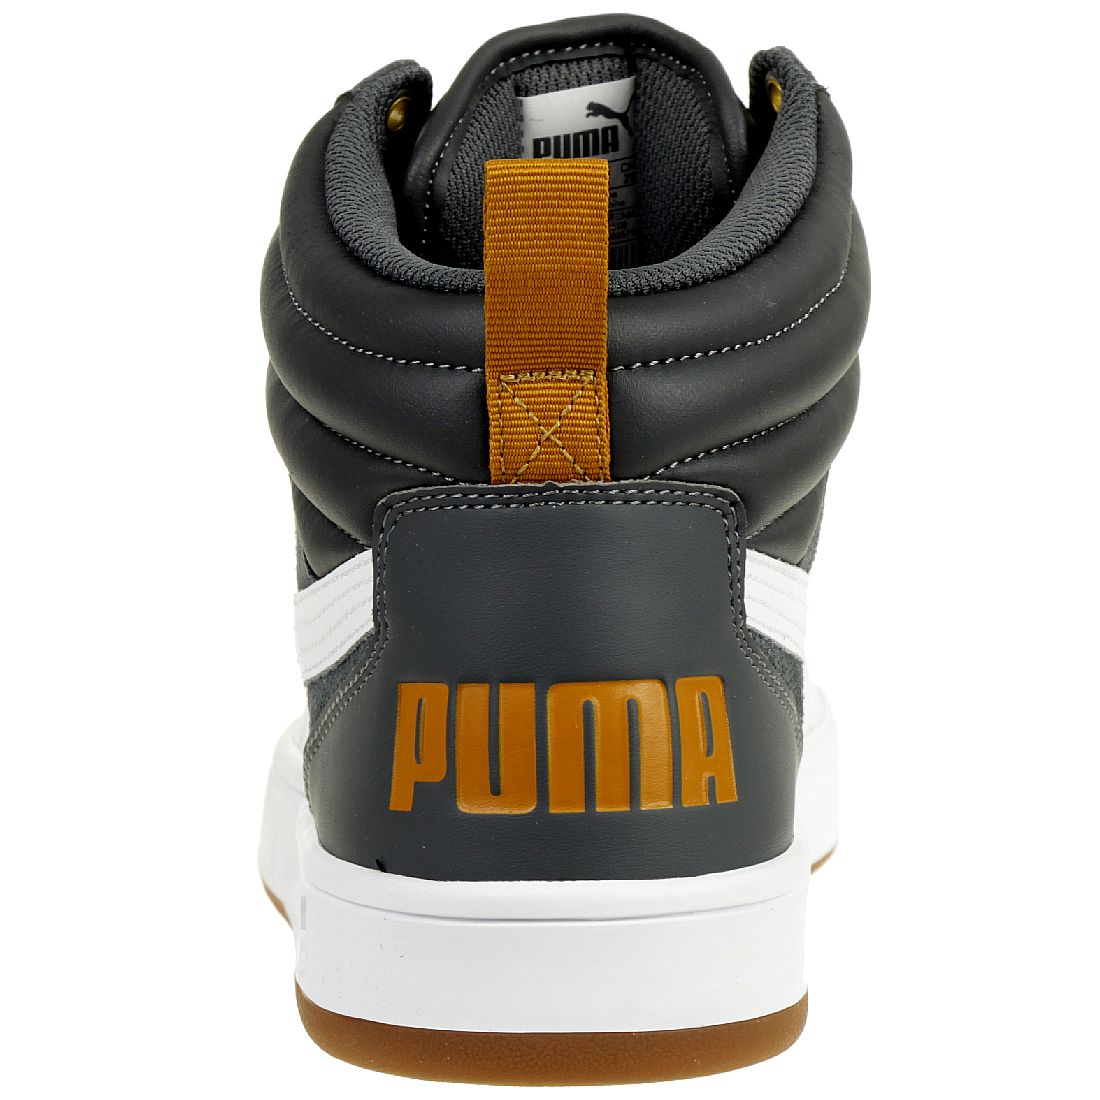 Puma Rebound Street V2 Sneaker Herren Schuhe grau 363715 08